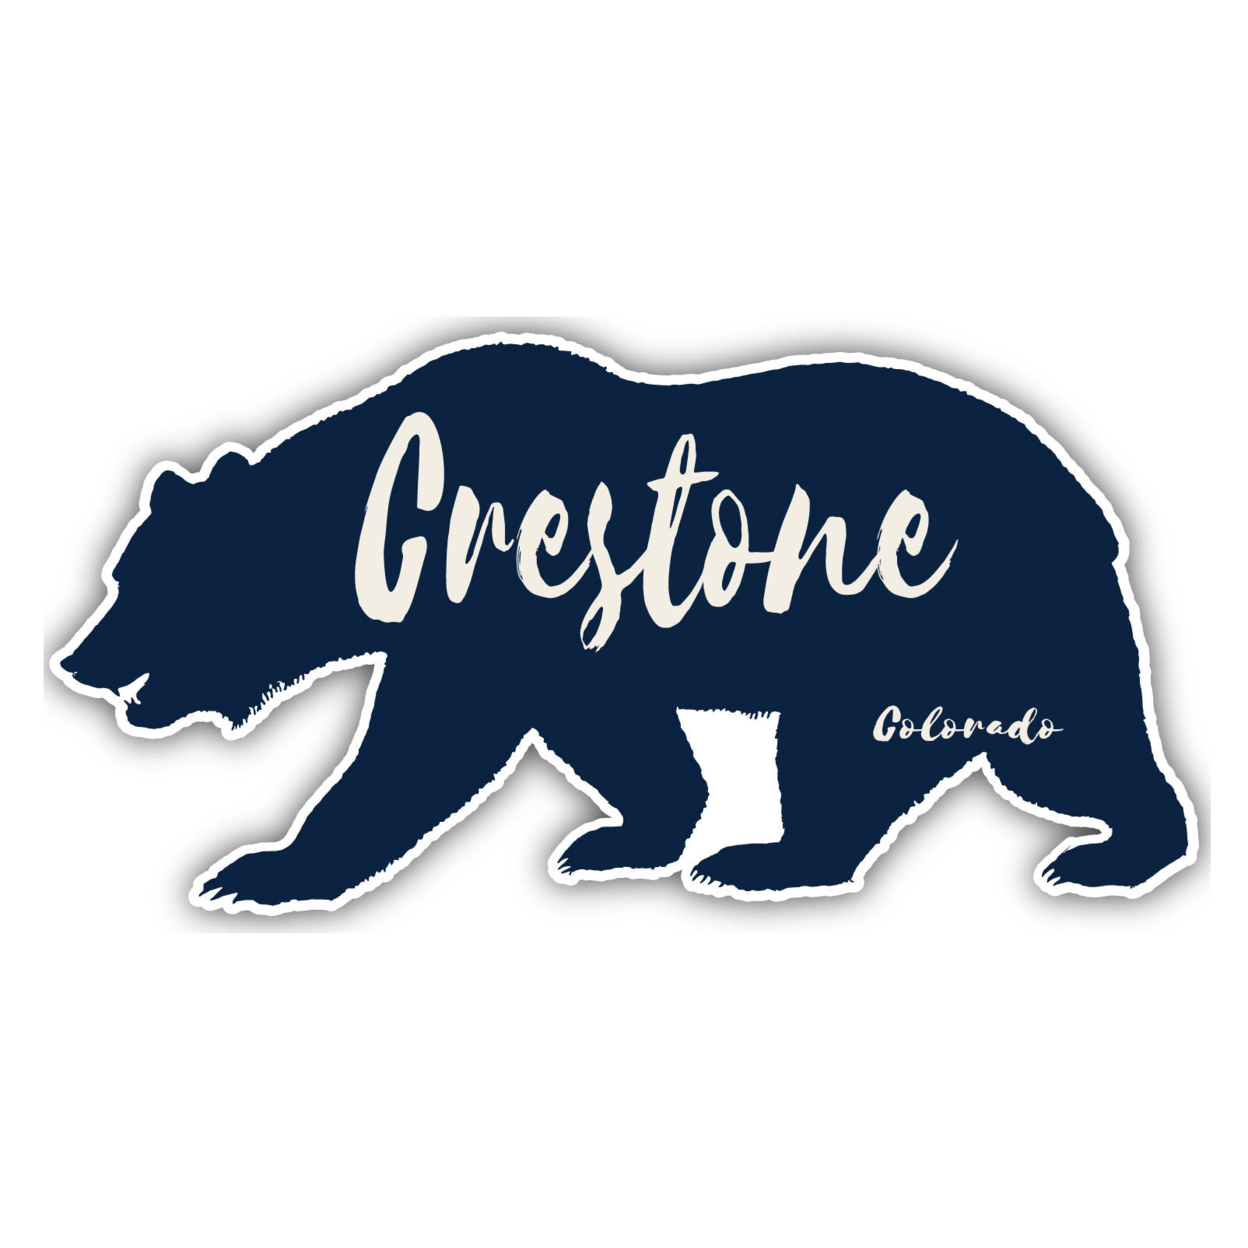 Crestone Colorado Souvenir Decorative Stickers (Choose Theme And Size) - Single Unit, 4-Inch, Camp Life